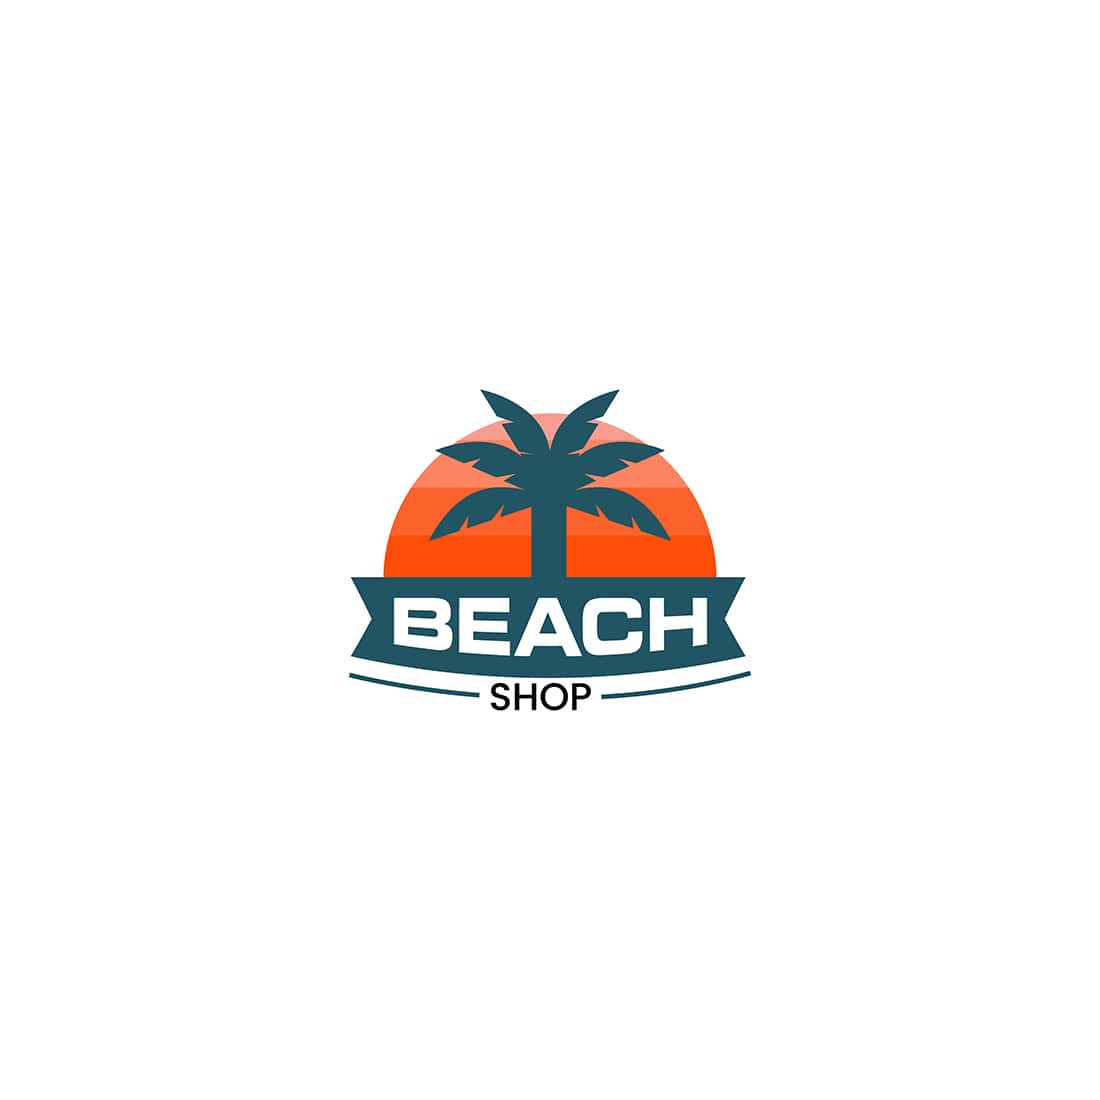 beach shop logo 02 min 244